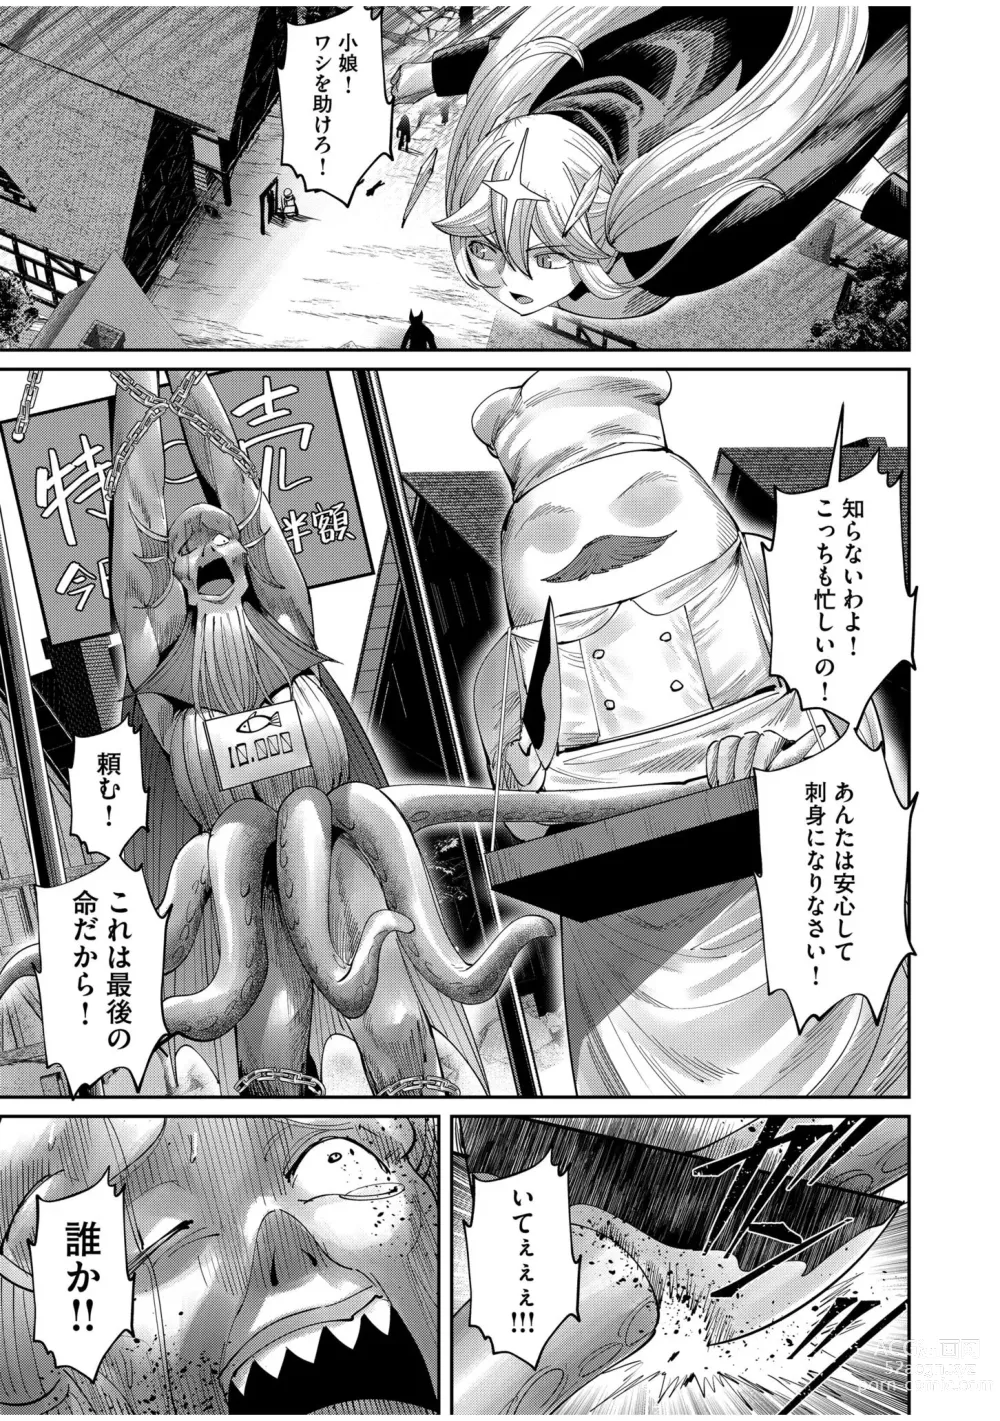 Page 155 of manga Kichiku Eiyuu Vol.07